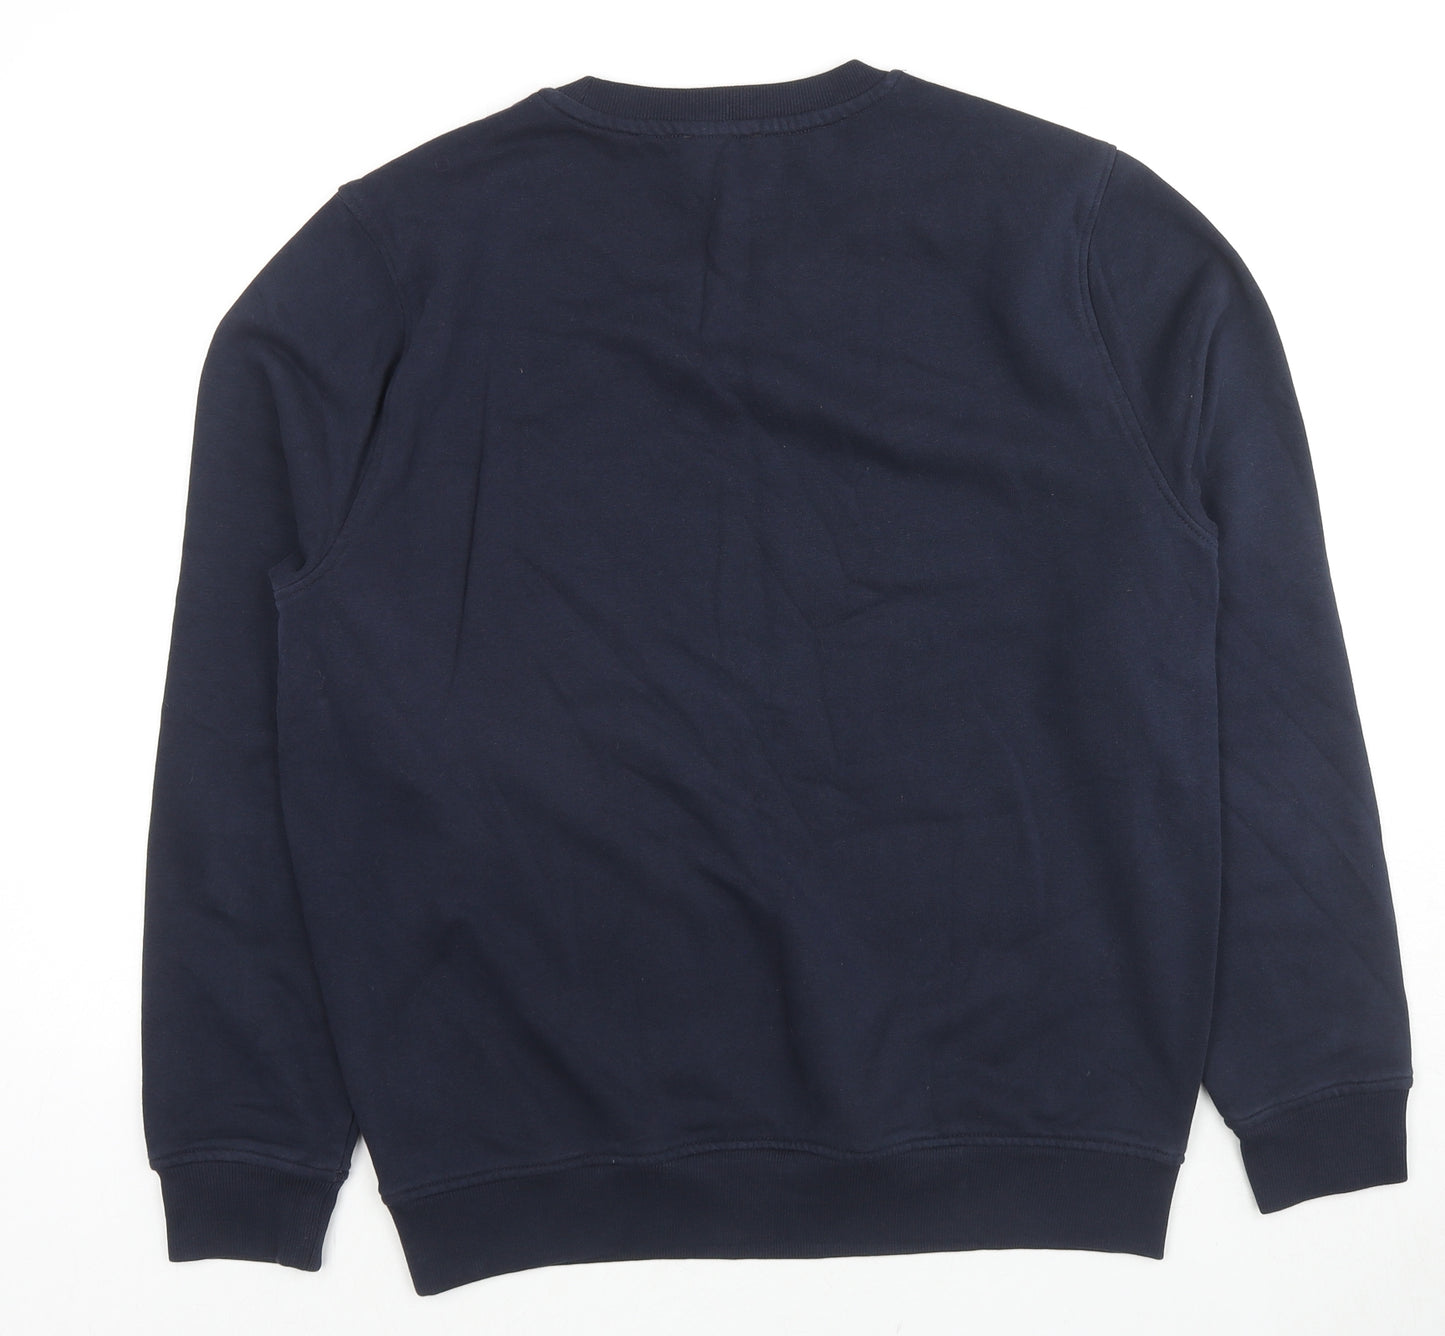 New Look Mens Blue Cotton Pullover Sweatshirt Size M